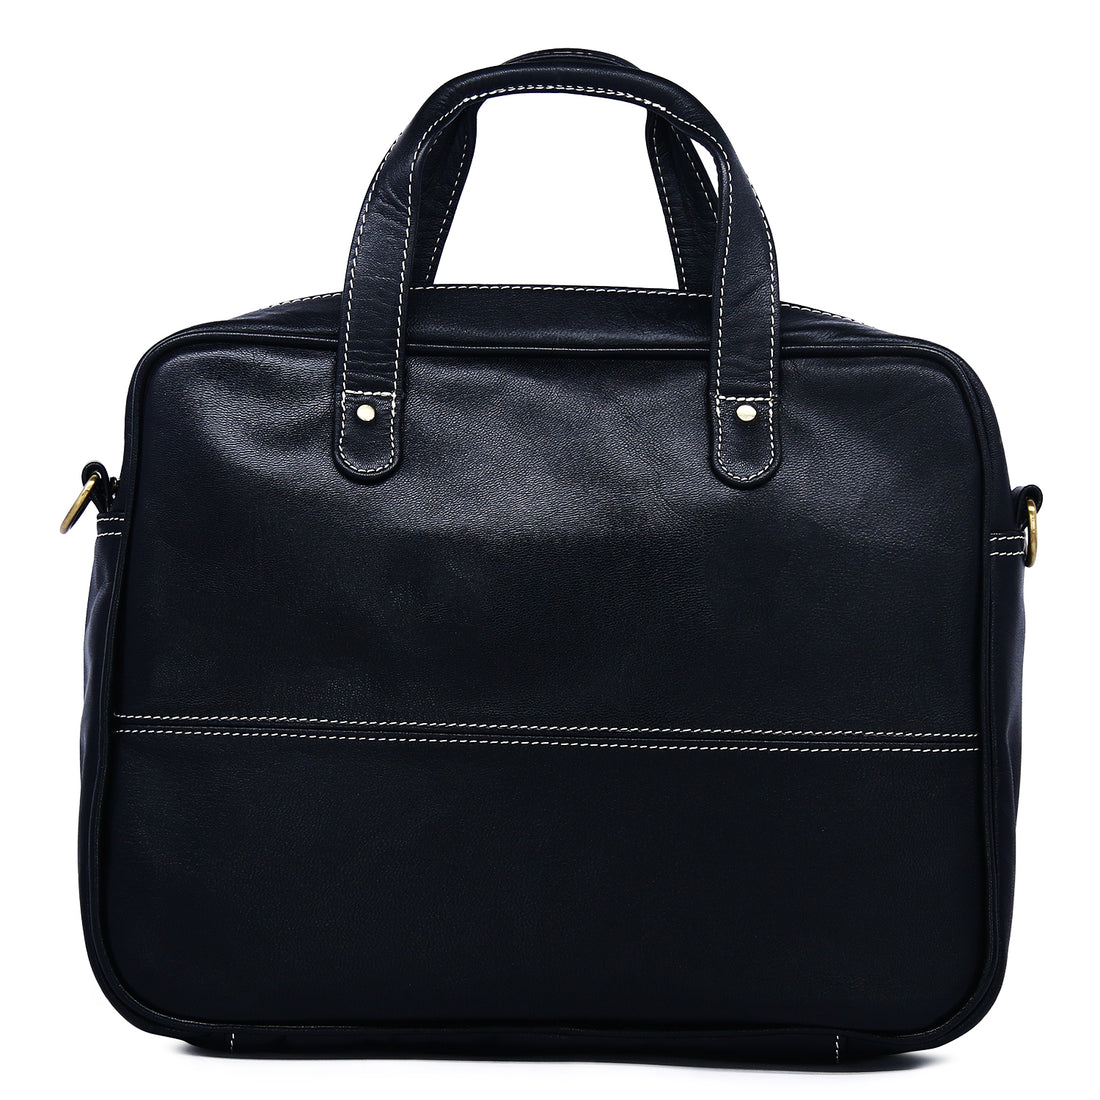 Hemener Black Genuine Leather Laptop Bag